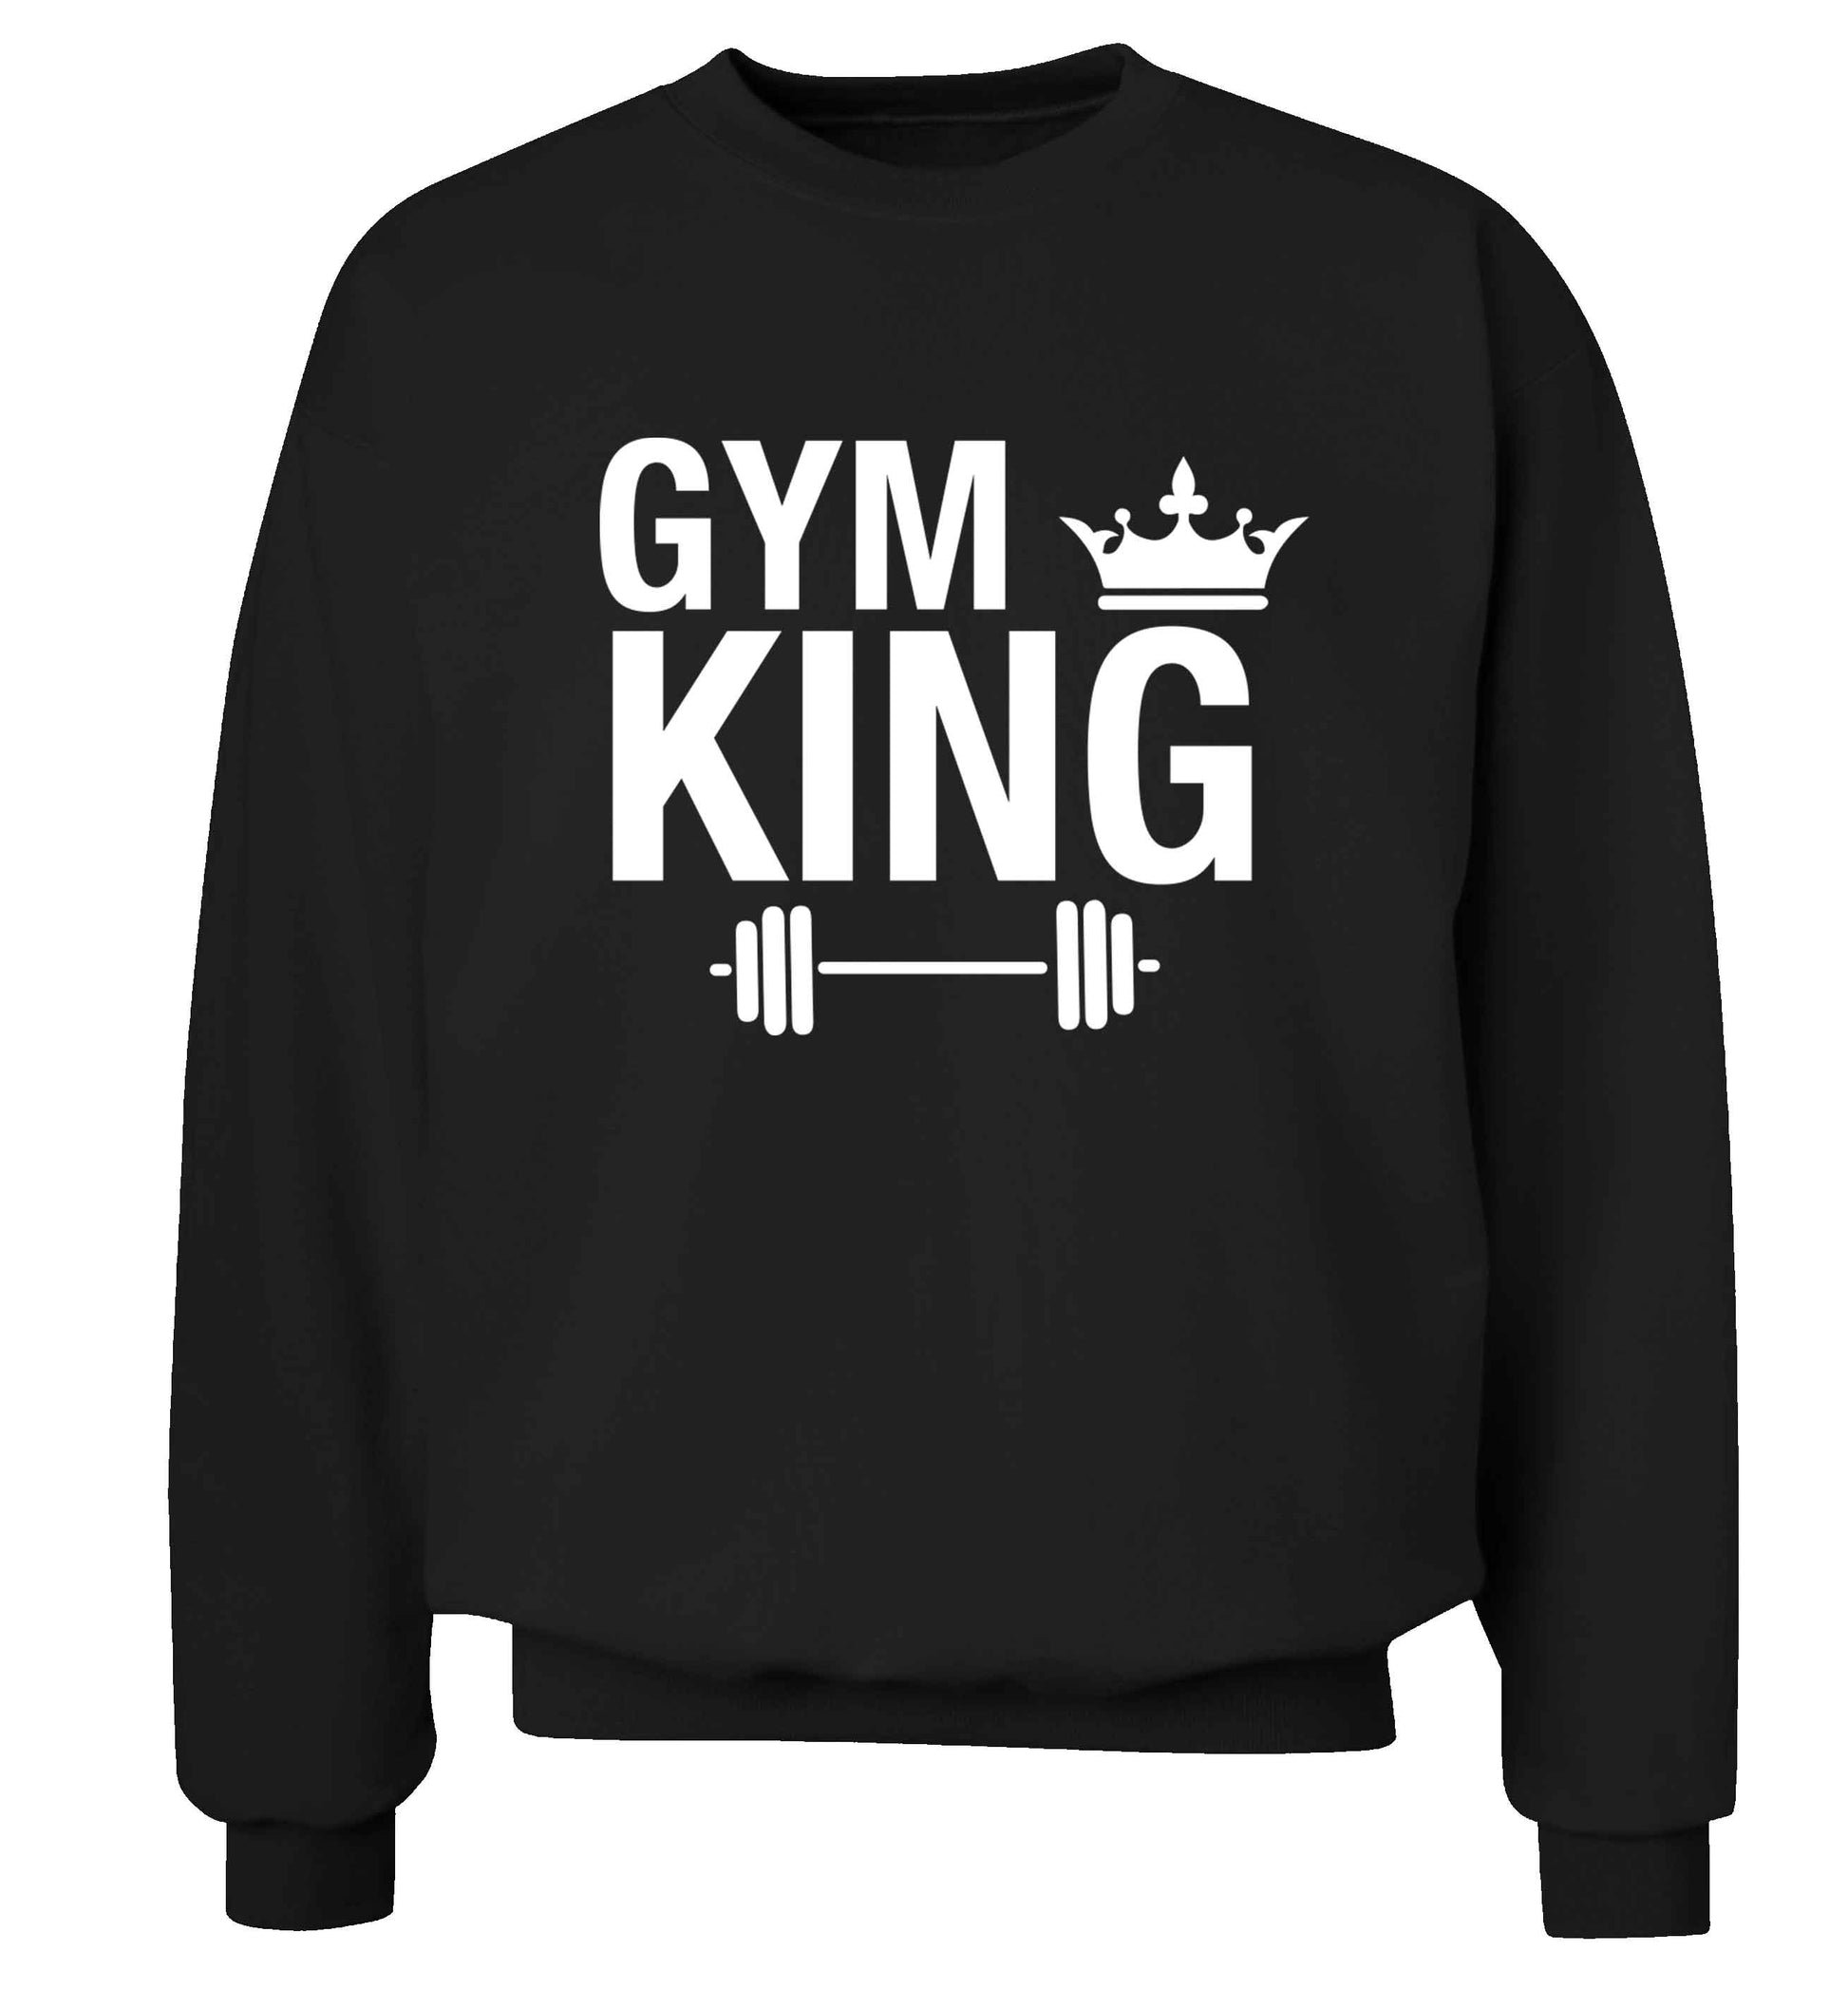 Gym king Adult's unisex black Sweater 2XL